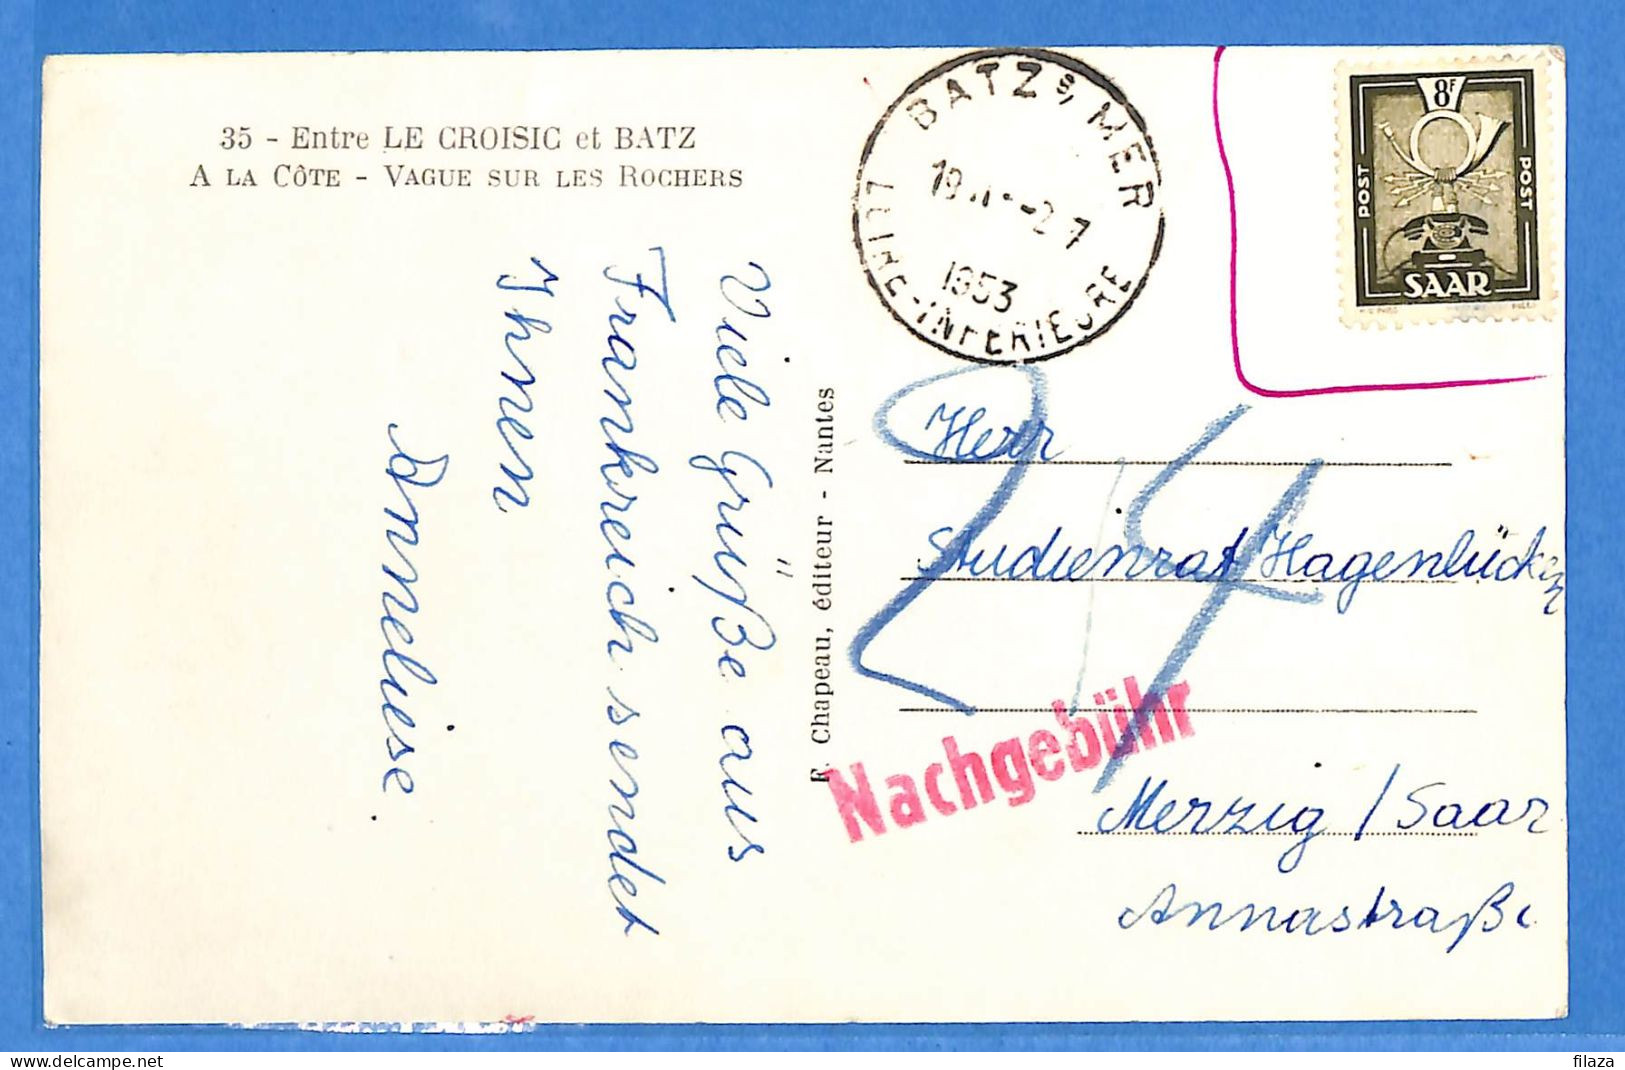 Saar - 1953 - Carte Postale De Batz Sur Mer - G31866 - Covers & Documents